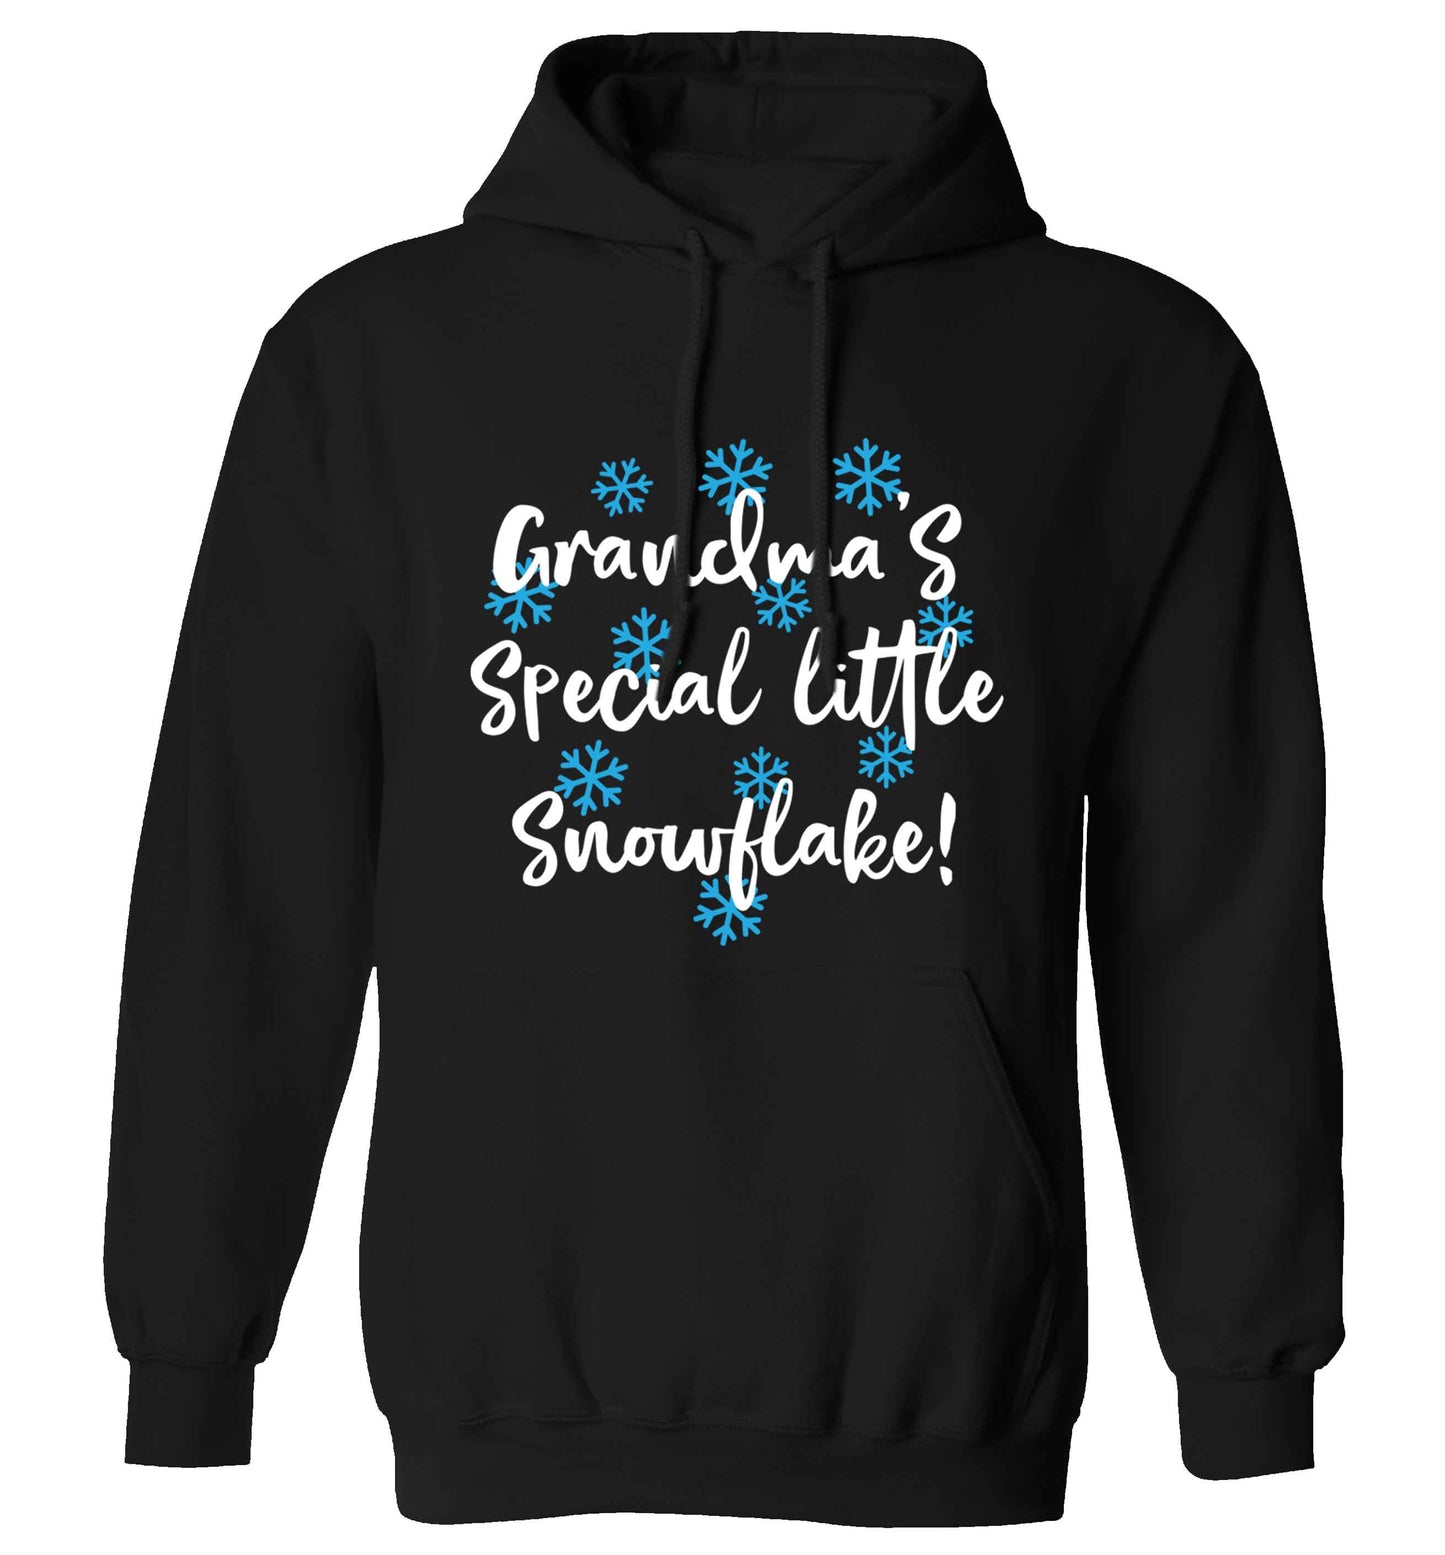 Grandma's special little snowflake adults unisex black hoodie 2XL